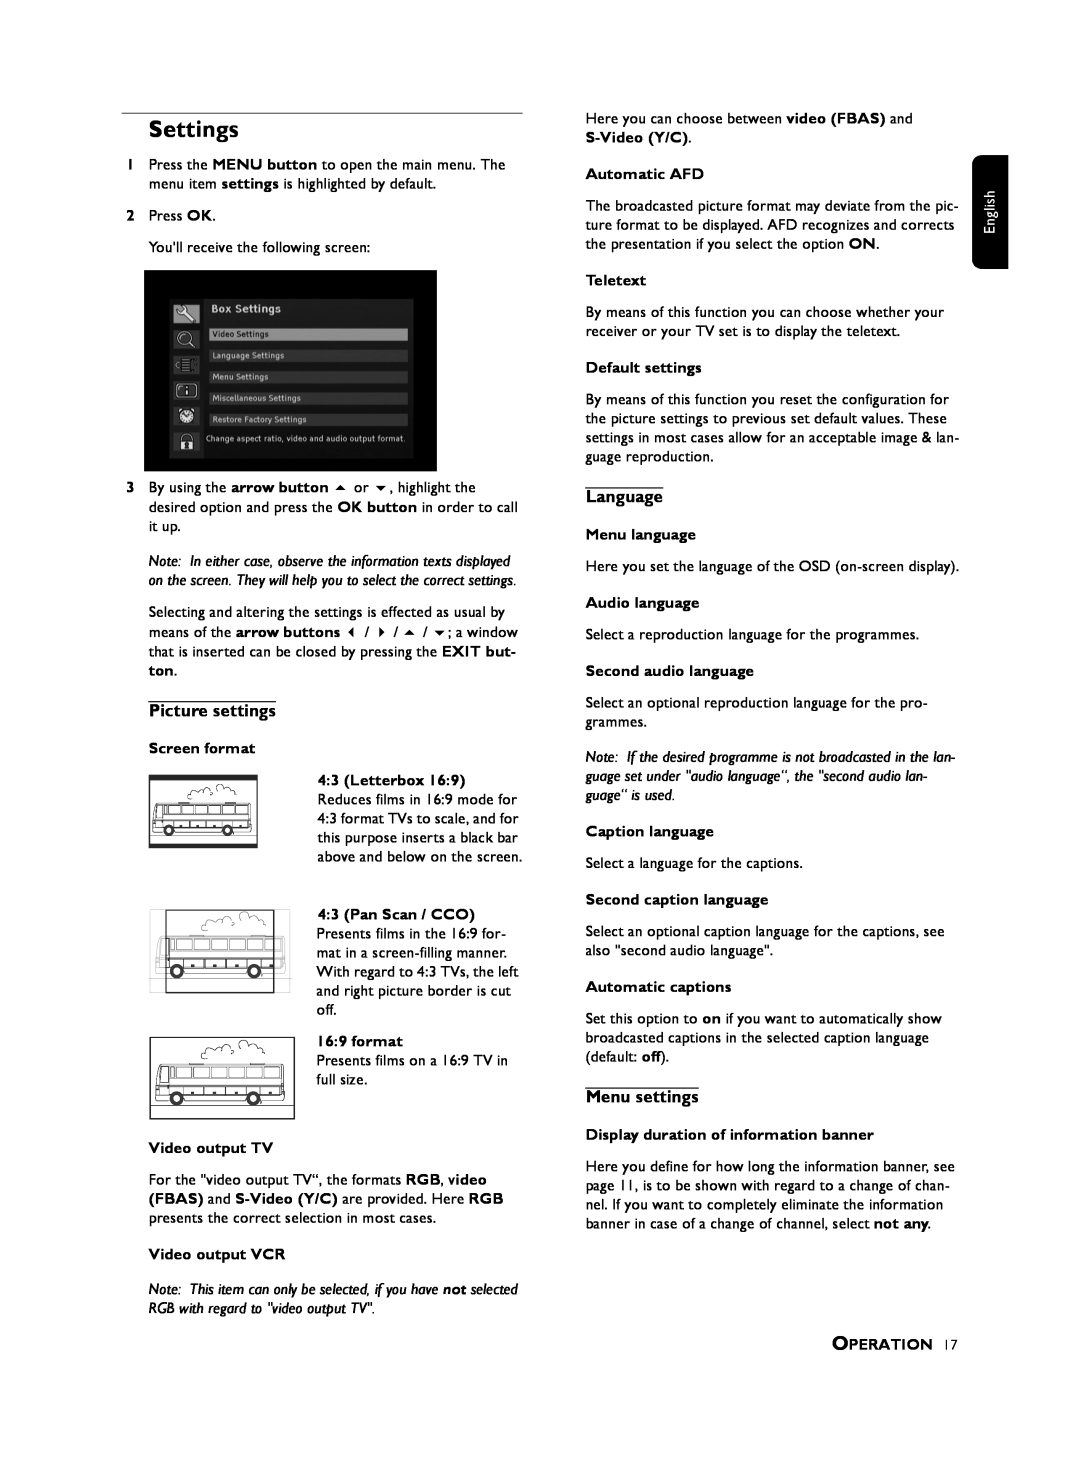 Philips 210, DTR user manual Settings, Picture settings, Language, Menu settings, English 